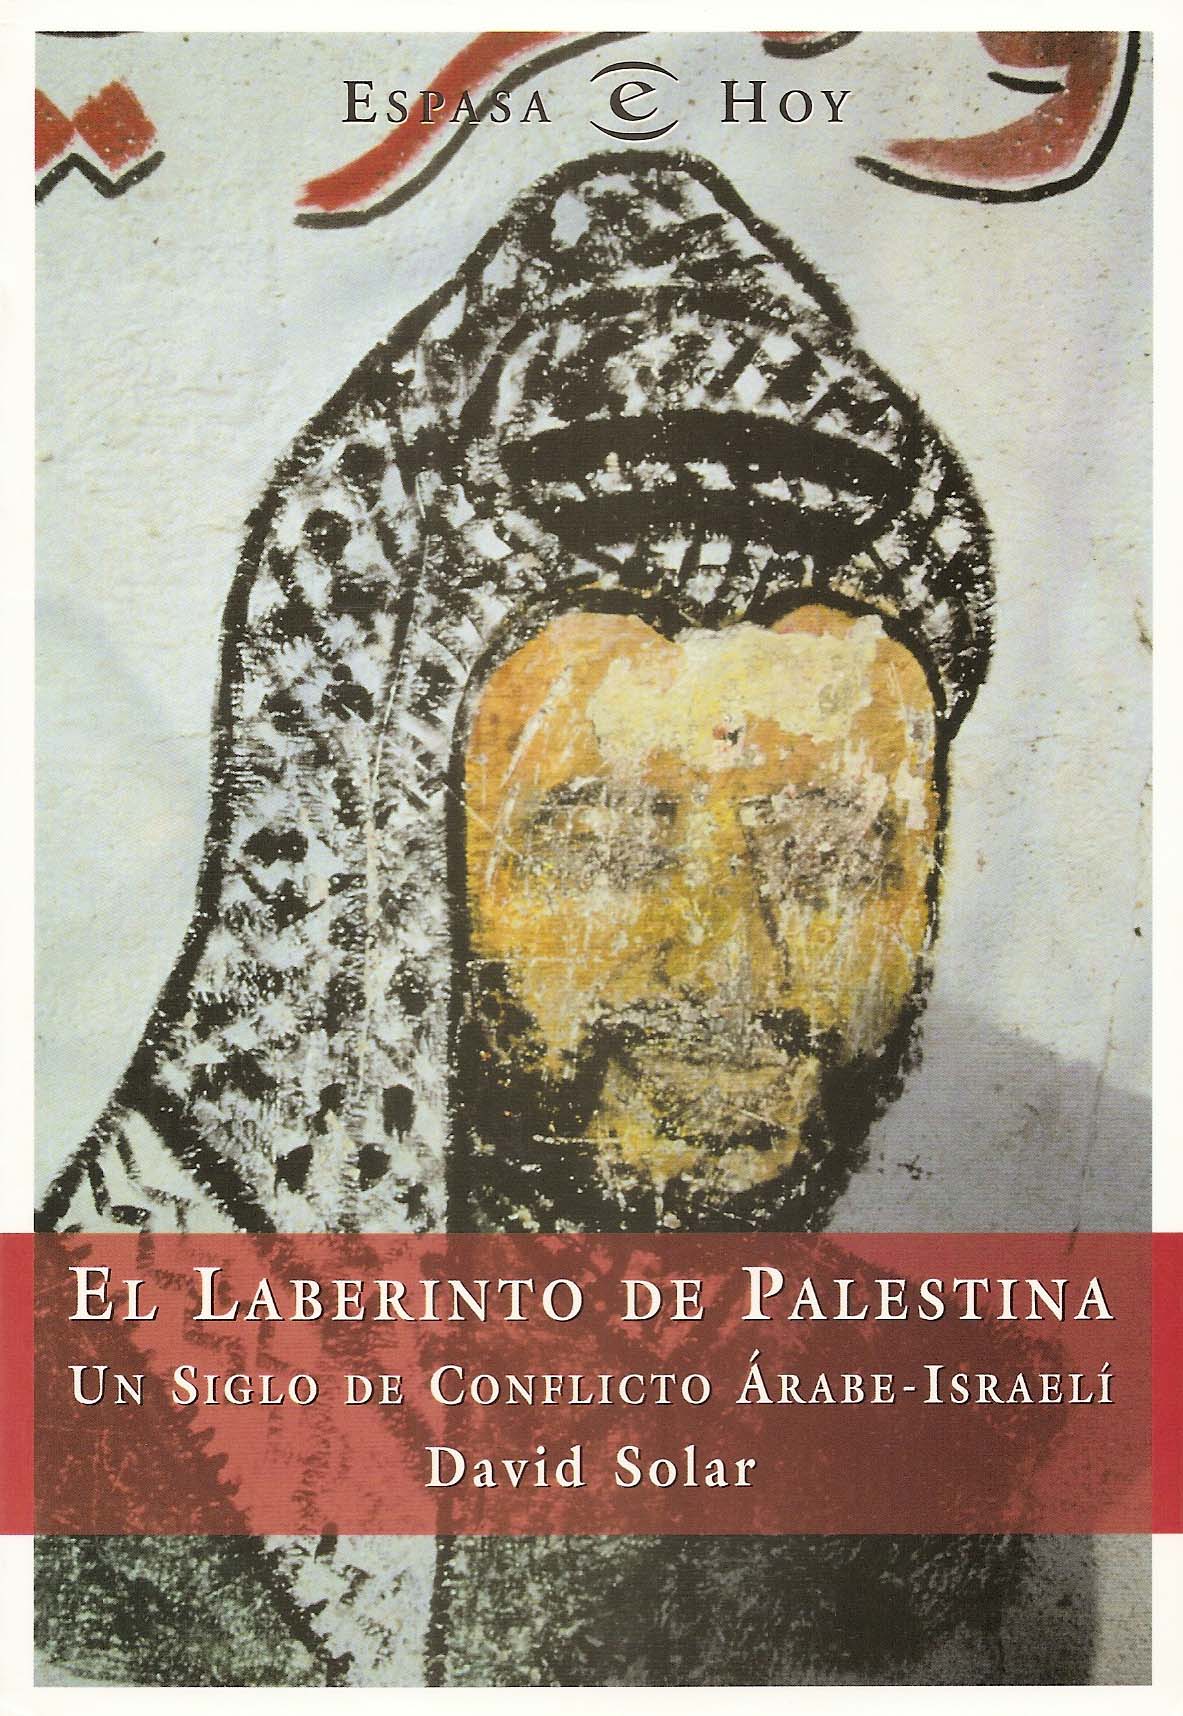 David Solar: El laberinto de Palestina (Spanish language, 1997, Espasa Calpe)